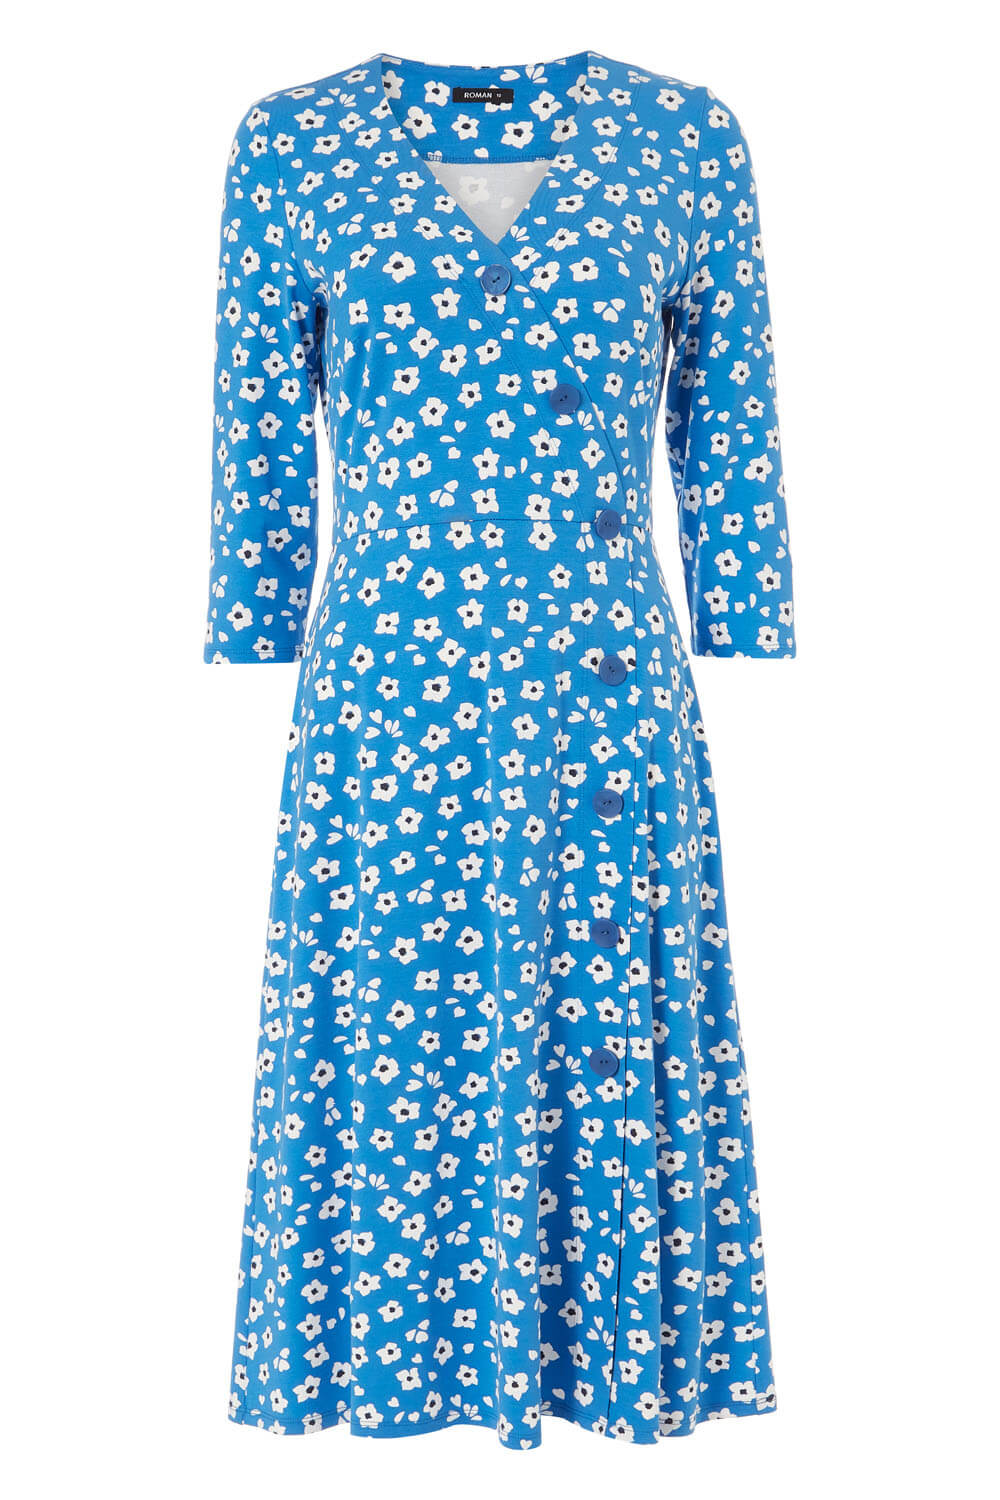 Floral Print Midi Length Tea Dress in Blue - Roman Originals UK